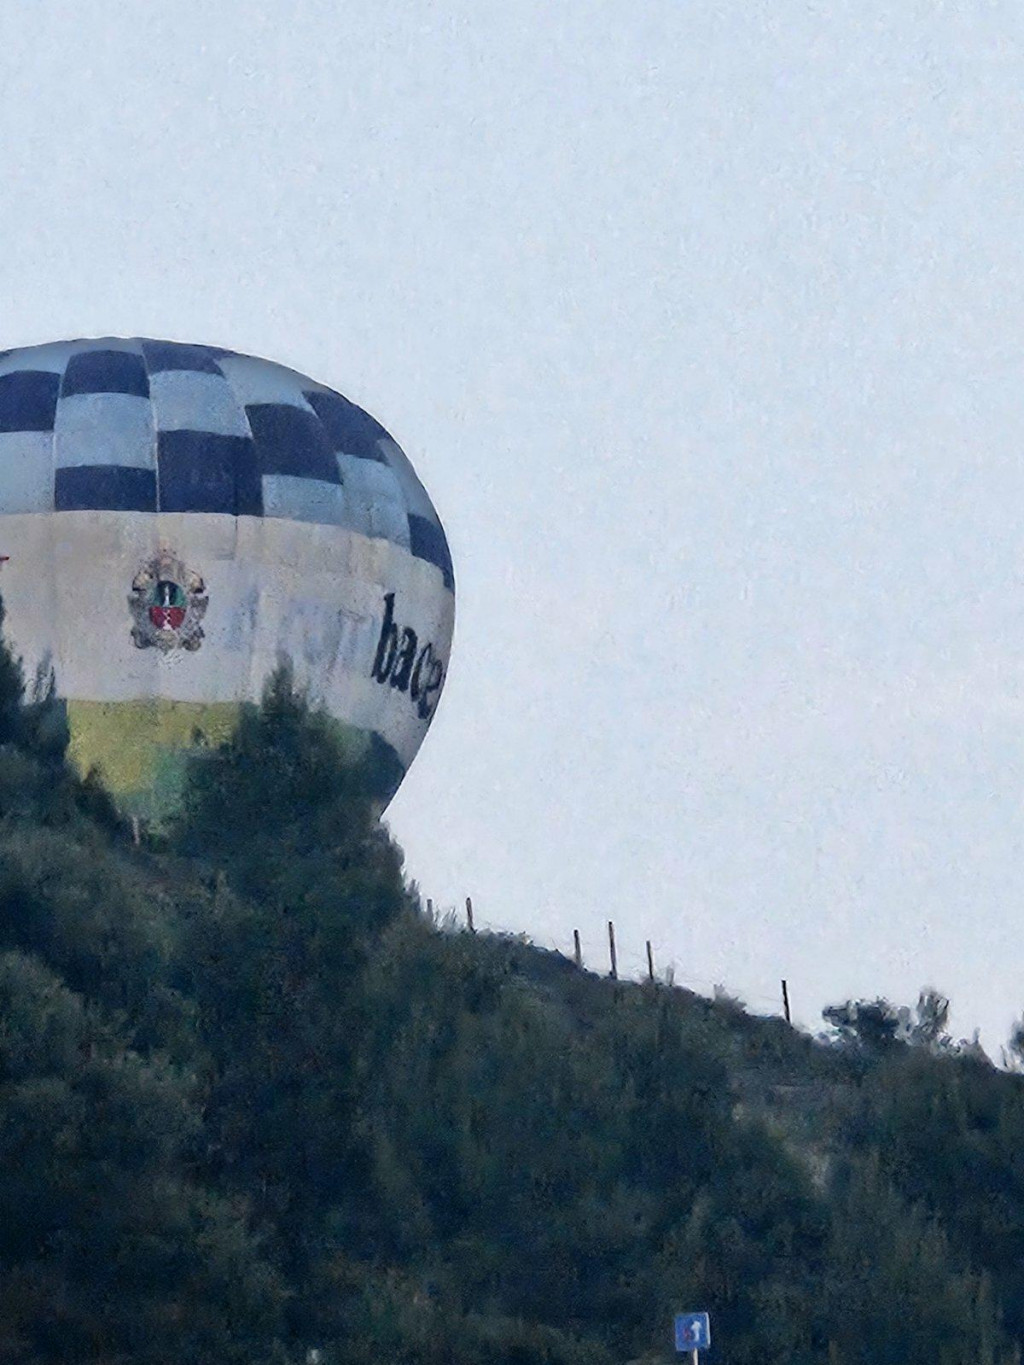 &lt;p&gt;Prvi let balonom vidio se s magistrale&lt;/p&gt;